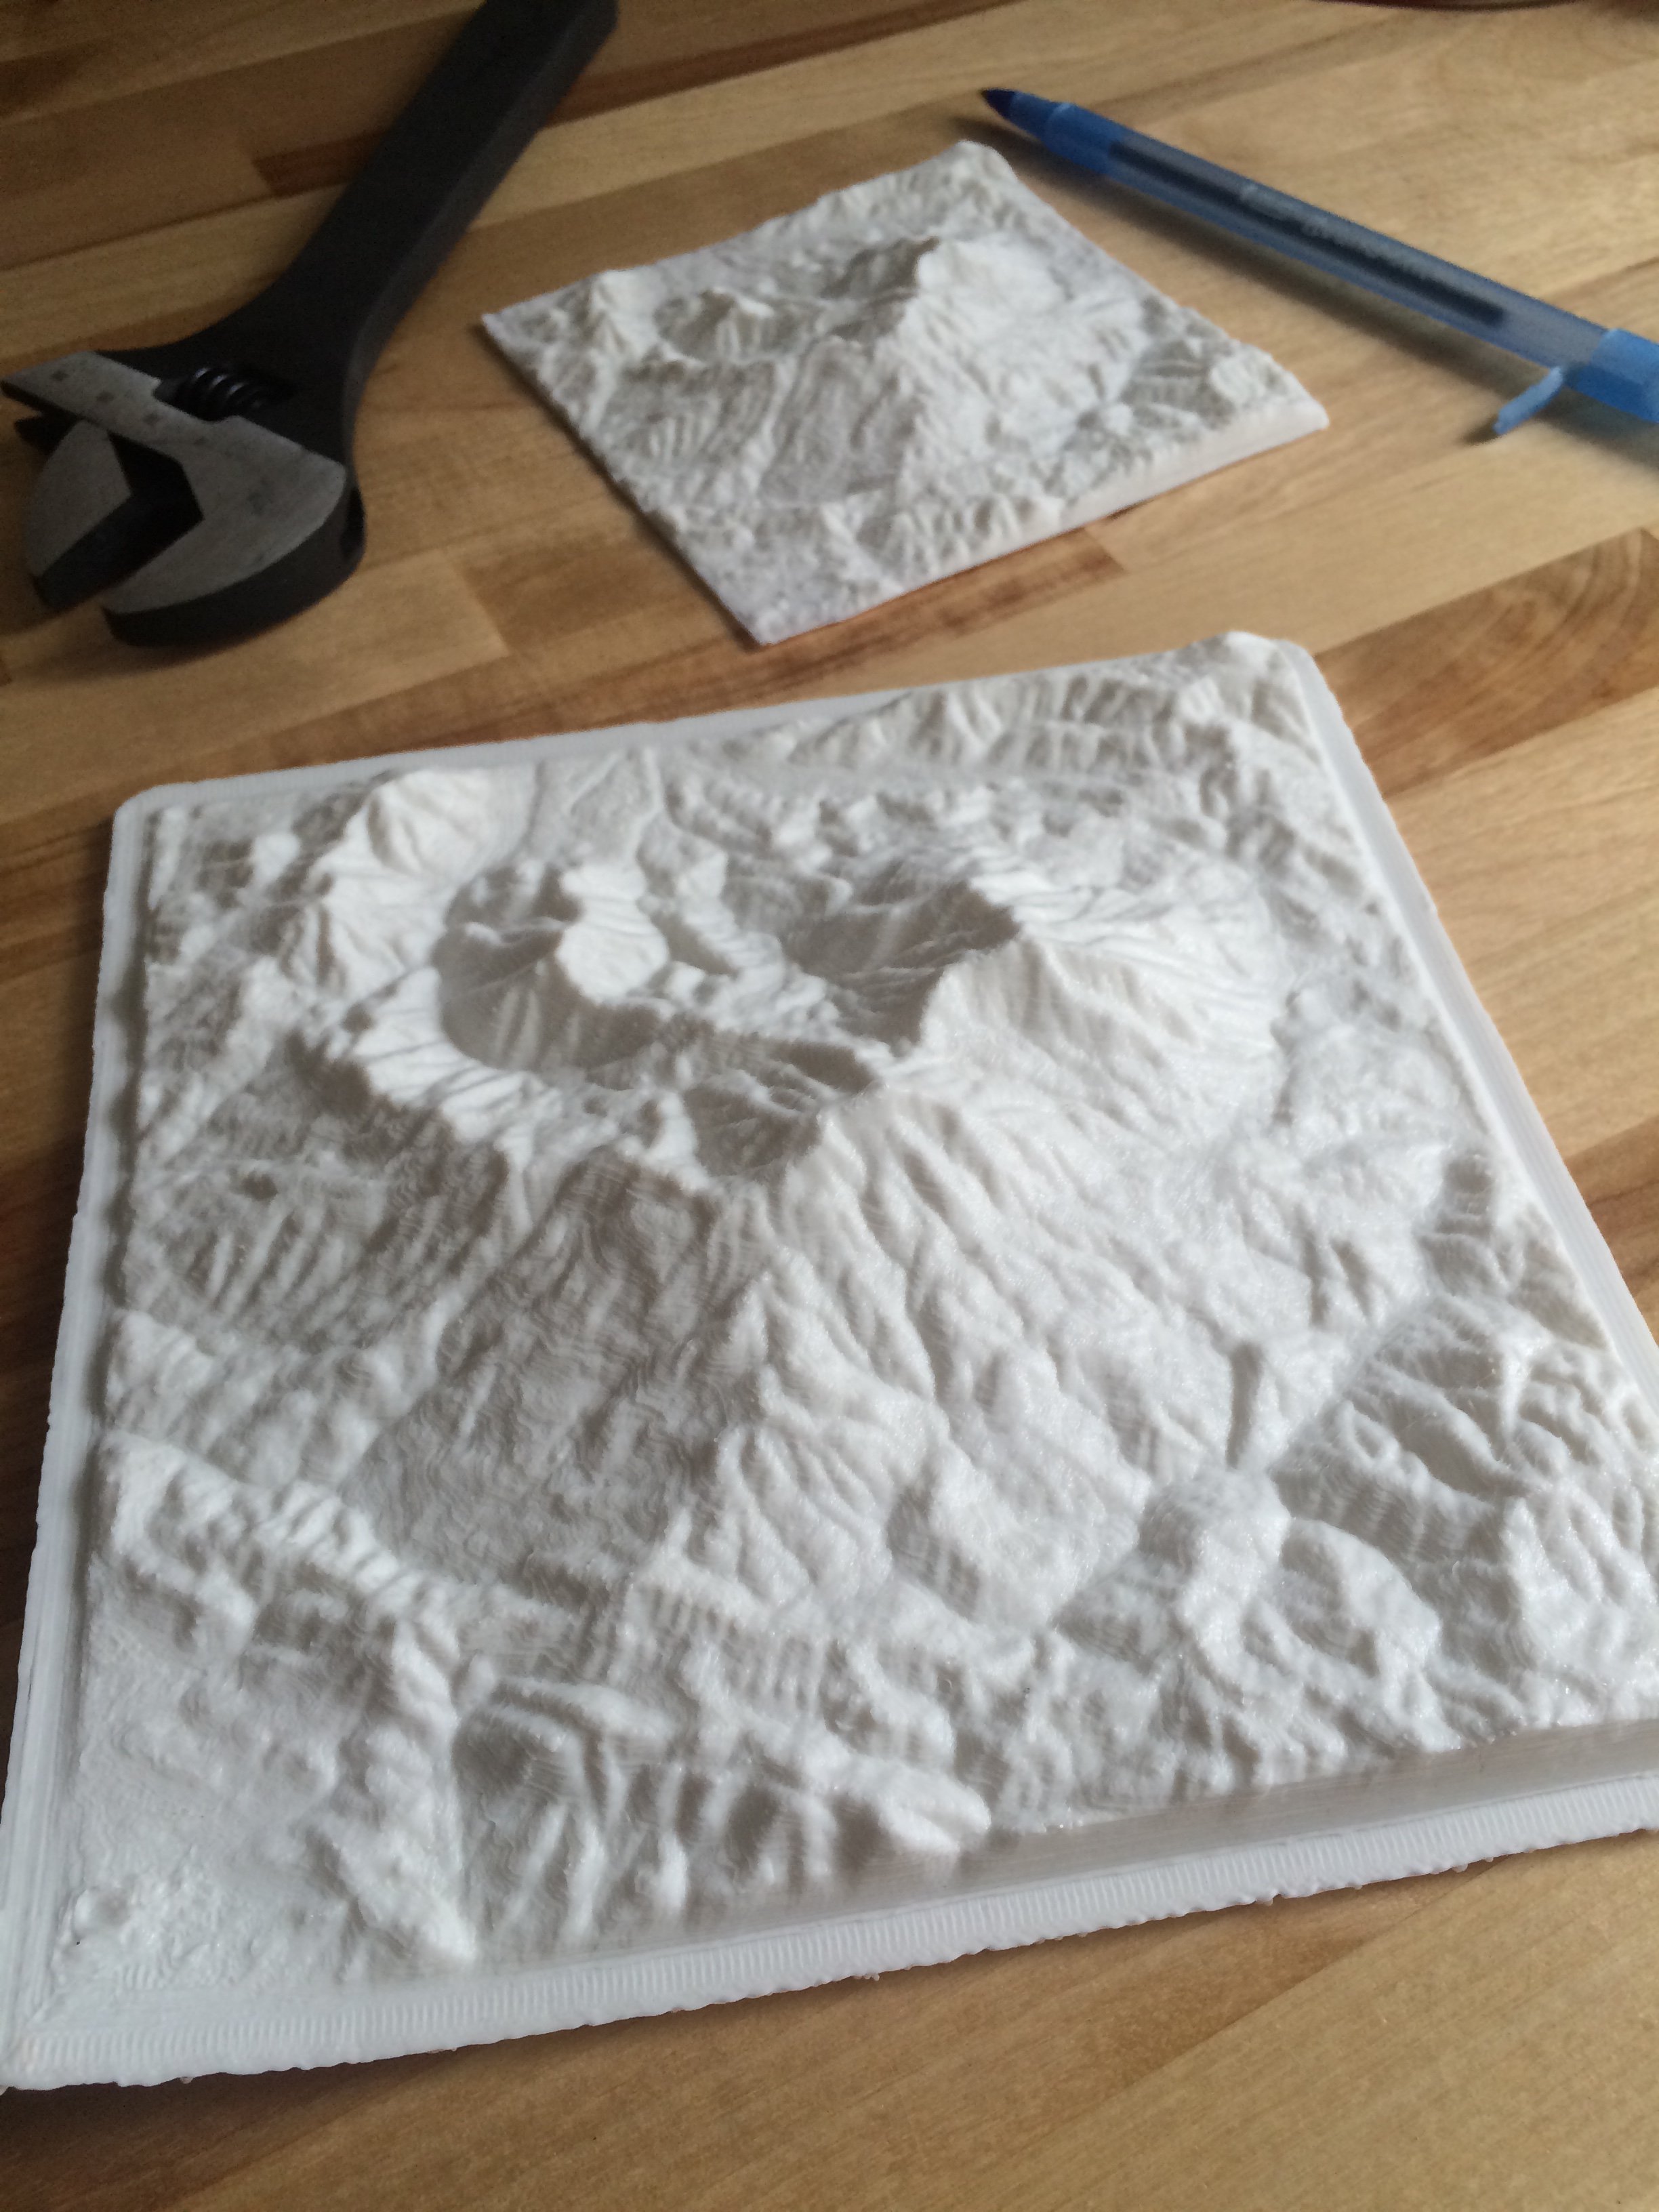 3D printed mountain